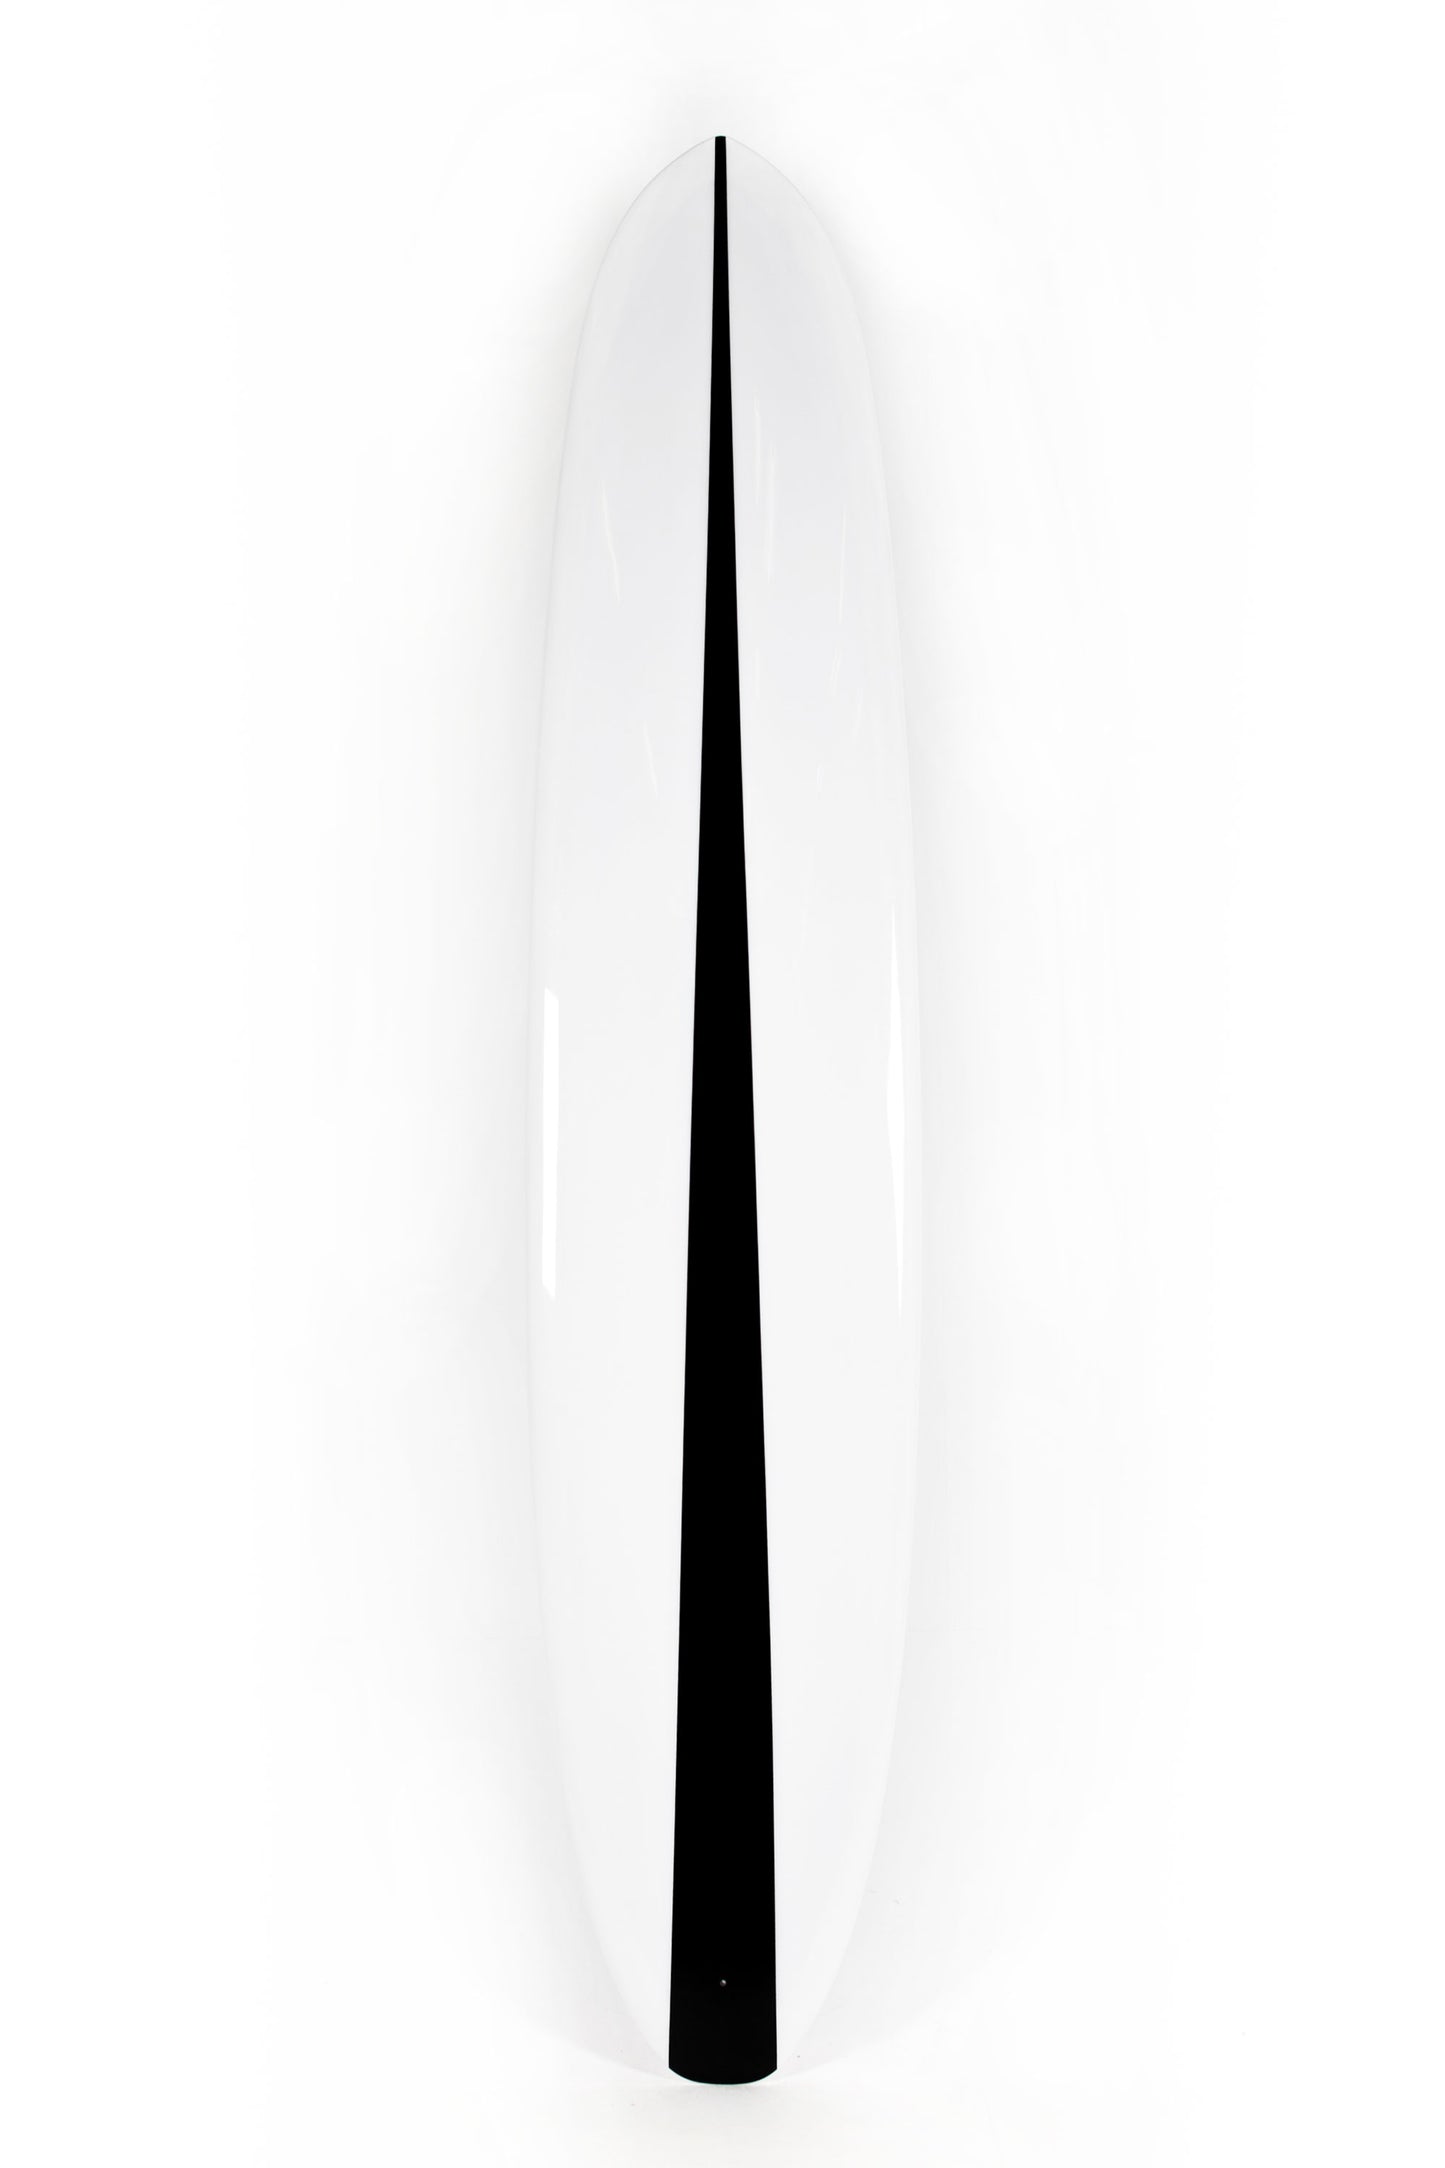 Pukas Surf Shop - Christenson Surfboard  - BANDITO by Chris Christenson - 9'3” x 22 3/4 x 2 7/8 - CX03181